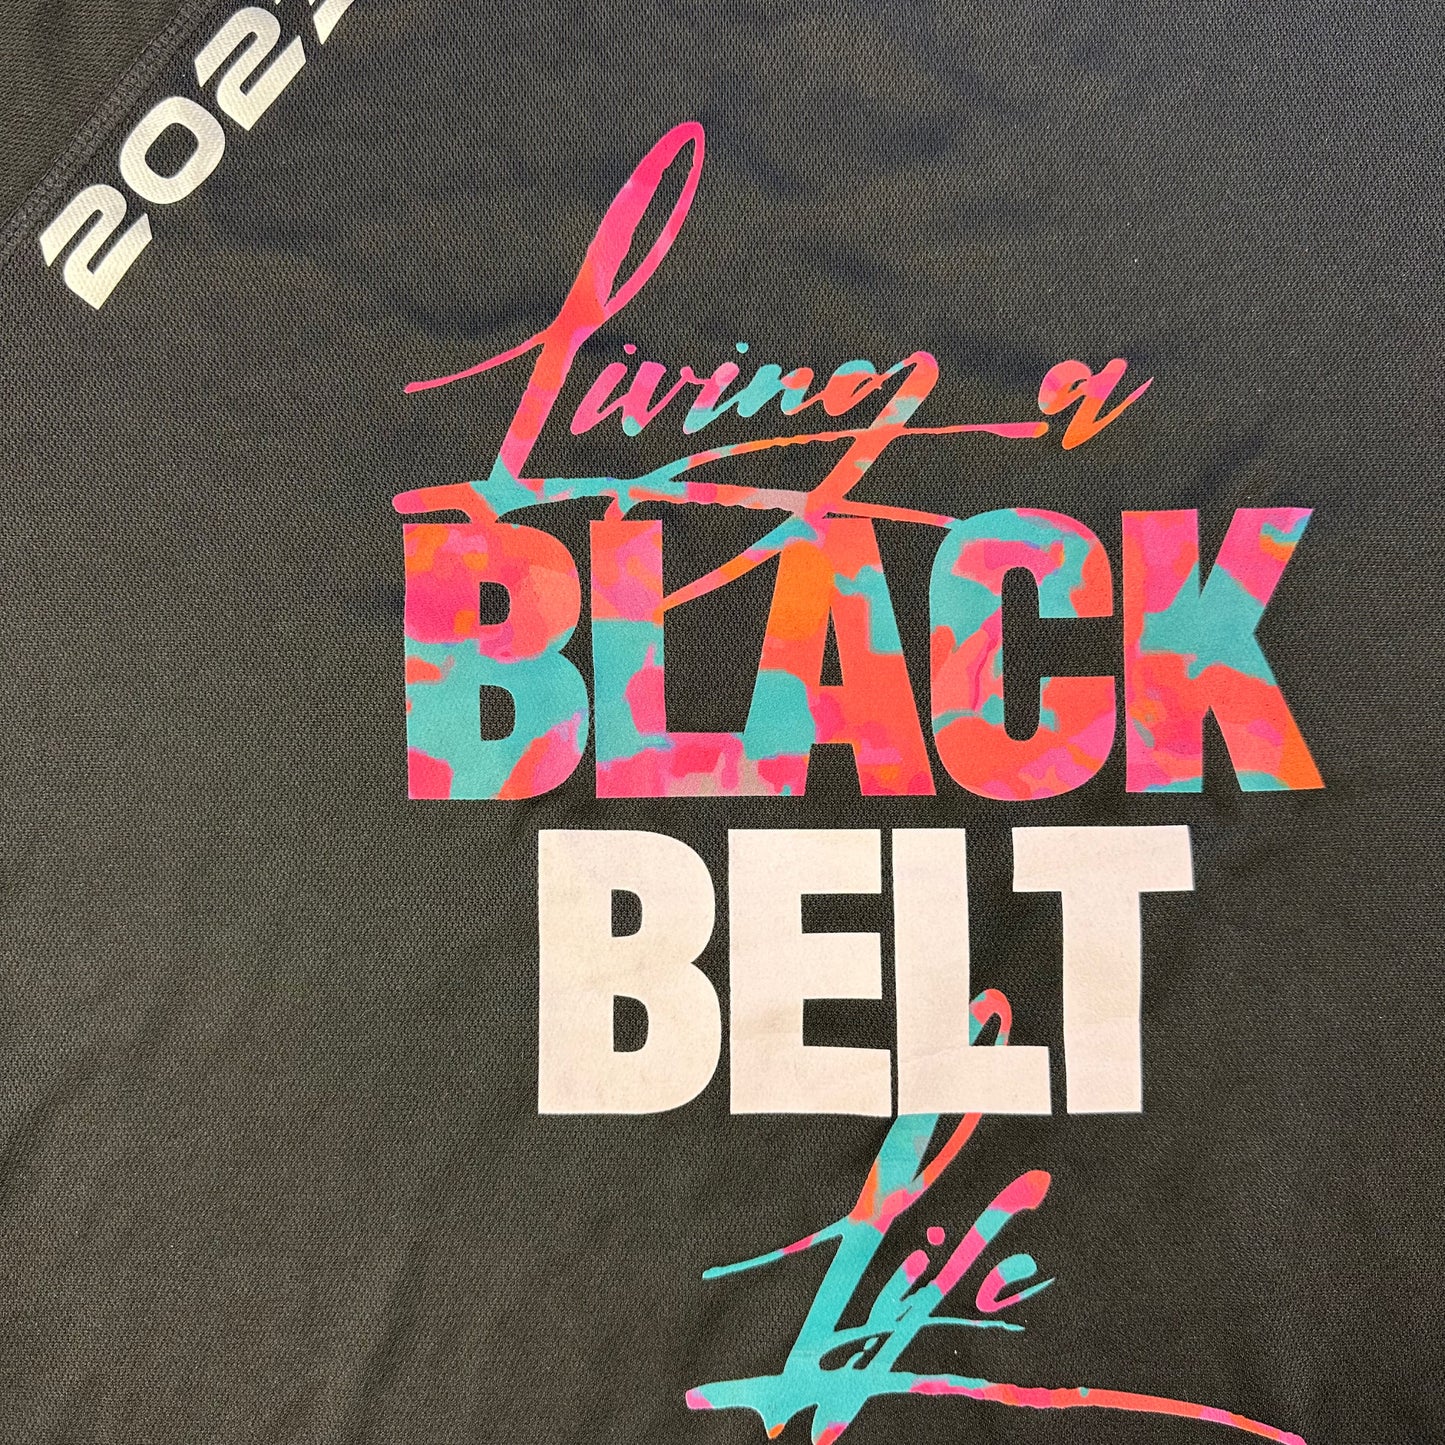 Camiseta Living a Black Belt Life